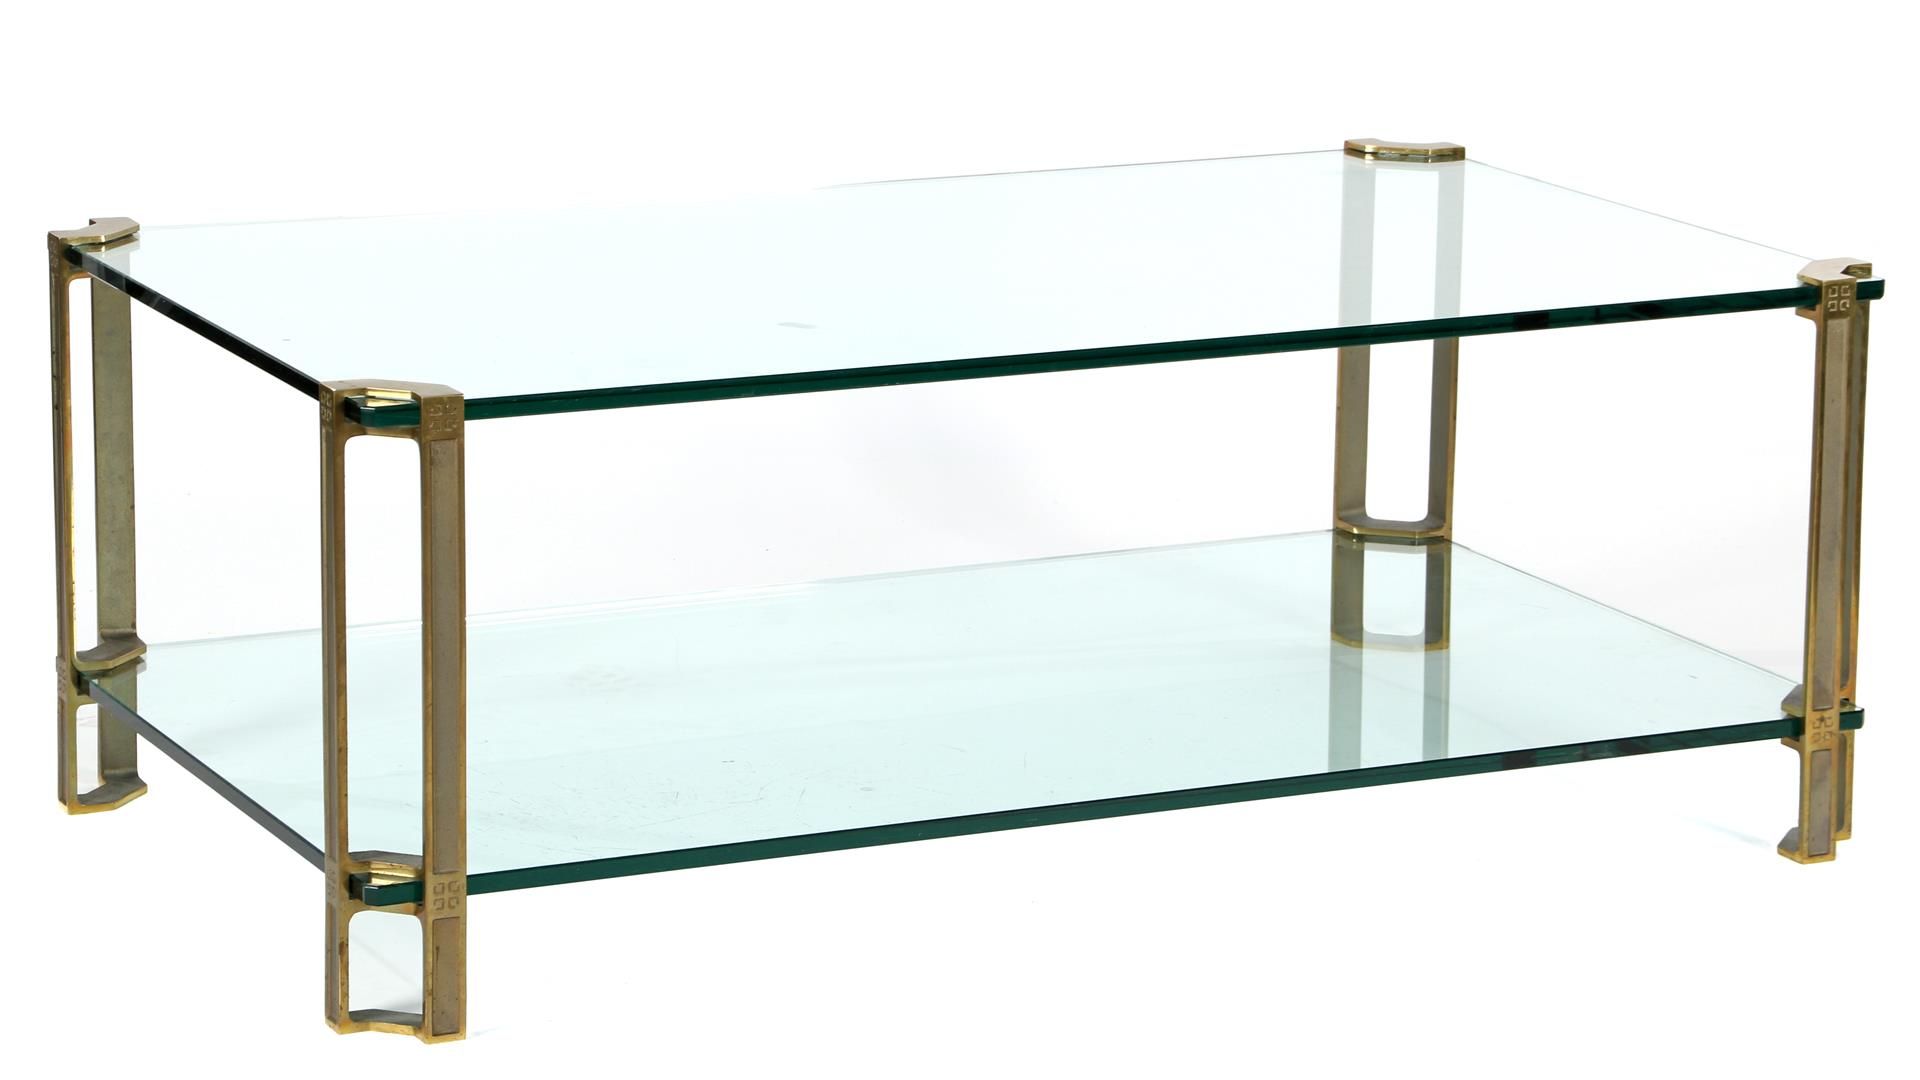 PETER GHYCZY 彼得-盖奇(1940-)

咖啡桌，有2个玻璃板，由黄铜直立物夹住，角落里有埃及文物，设计Peter Ghyczy，荷兰，20世纪末，&hellip;